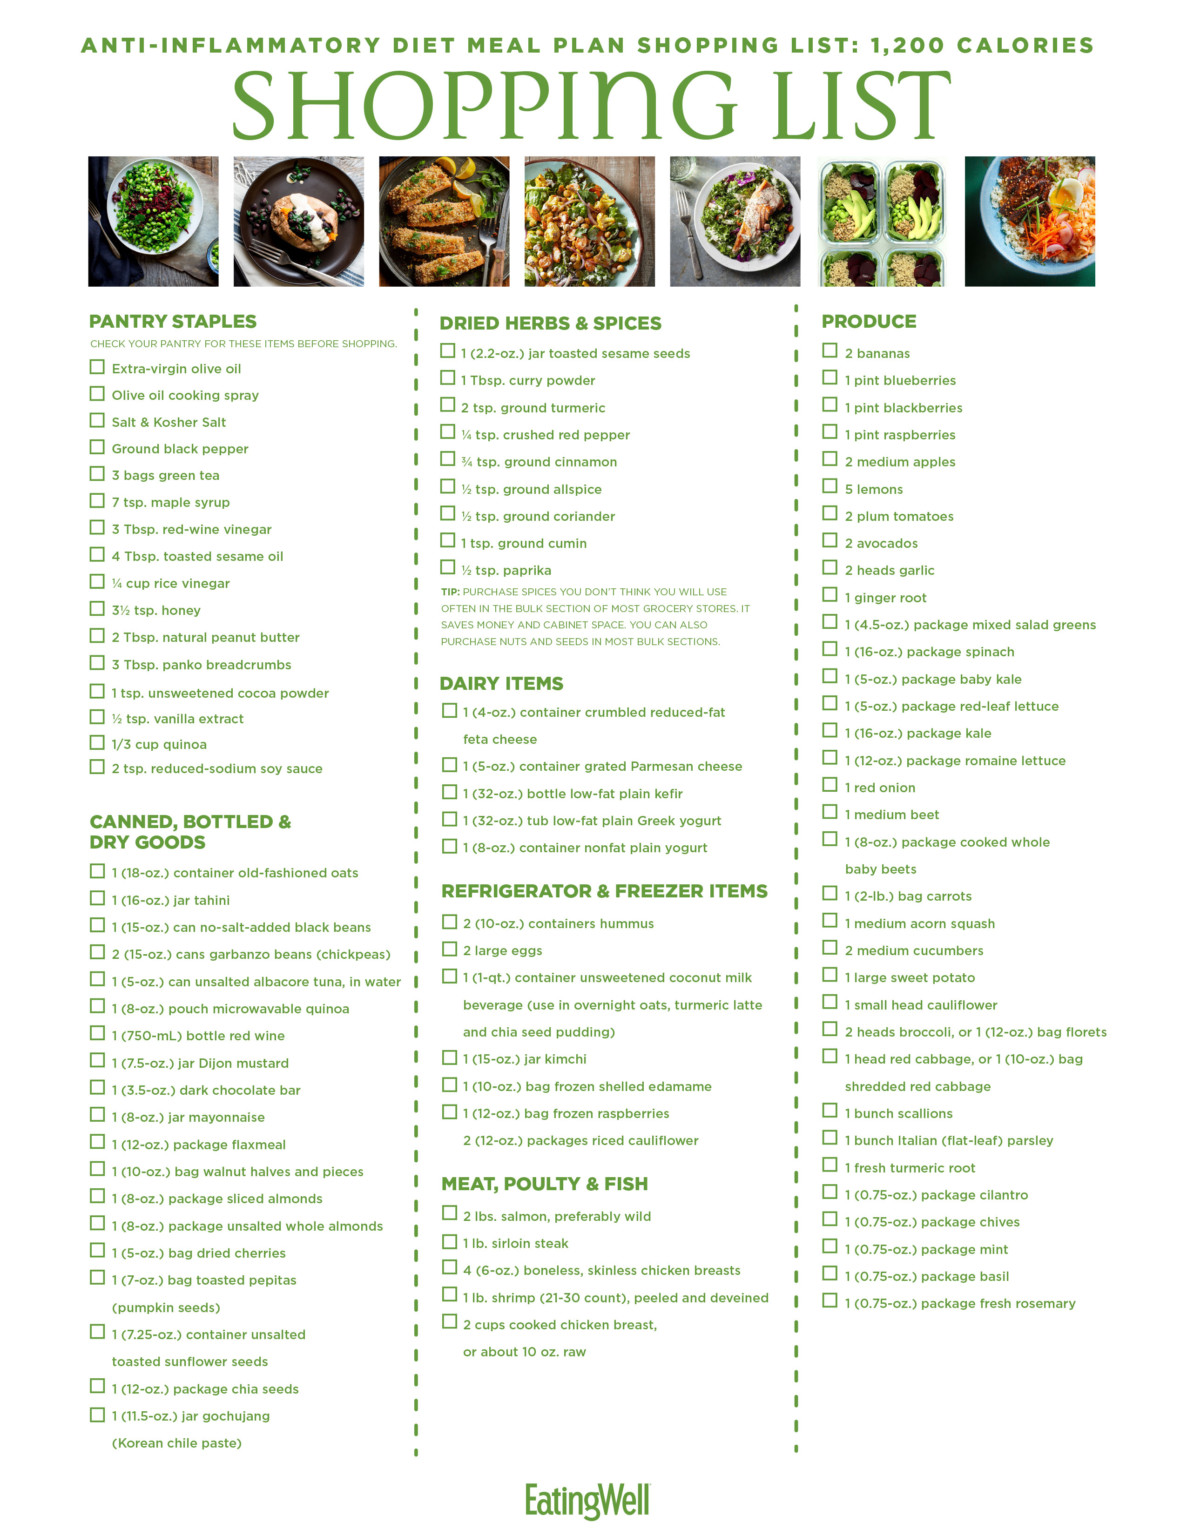 Printable Inflammatory Foods Chart